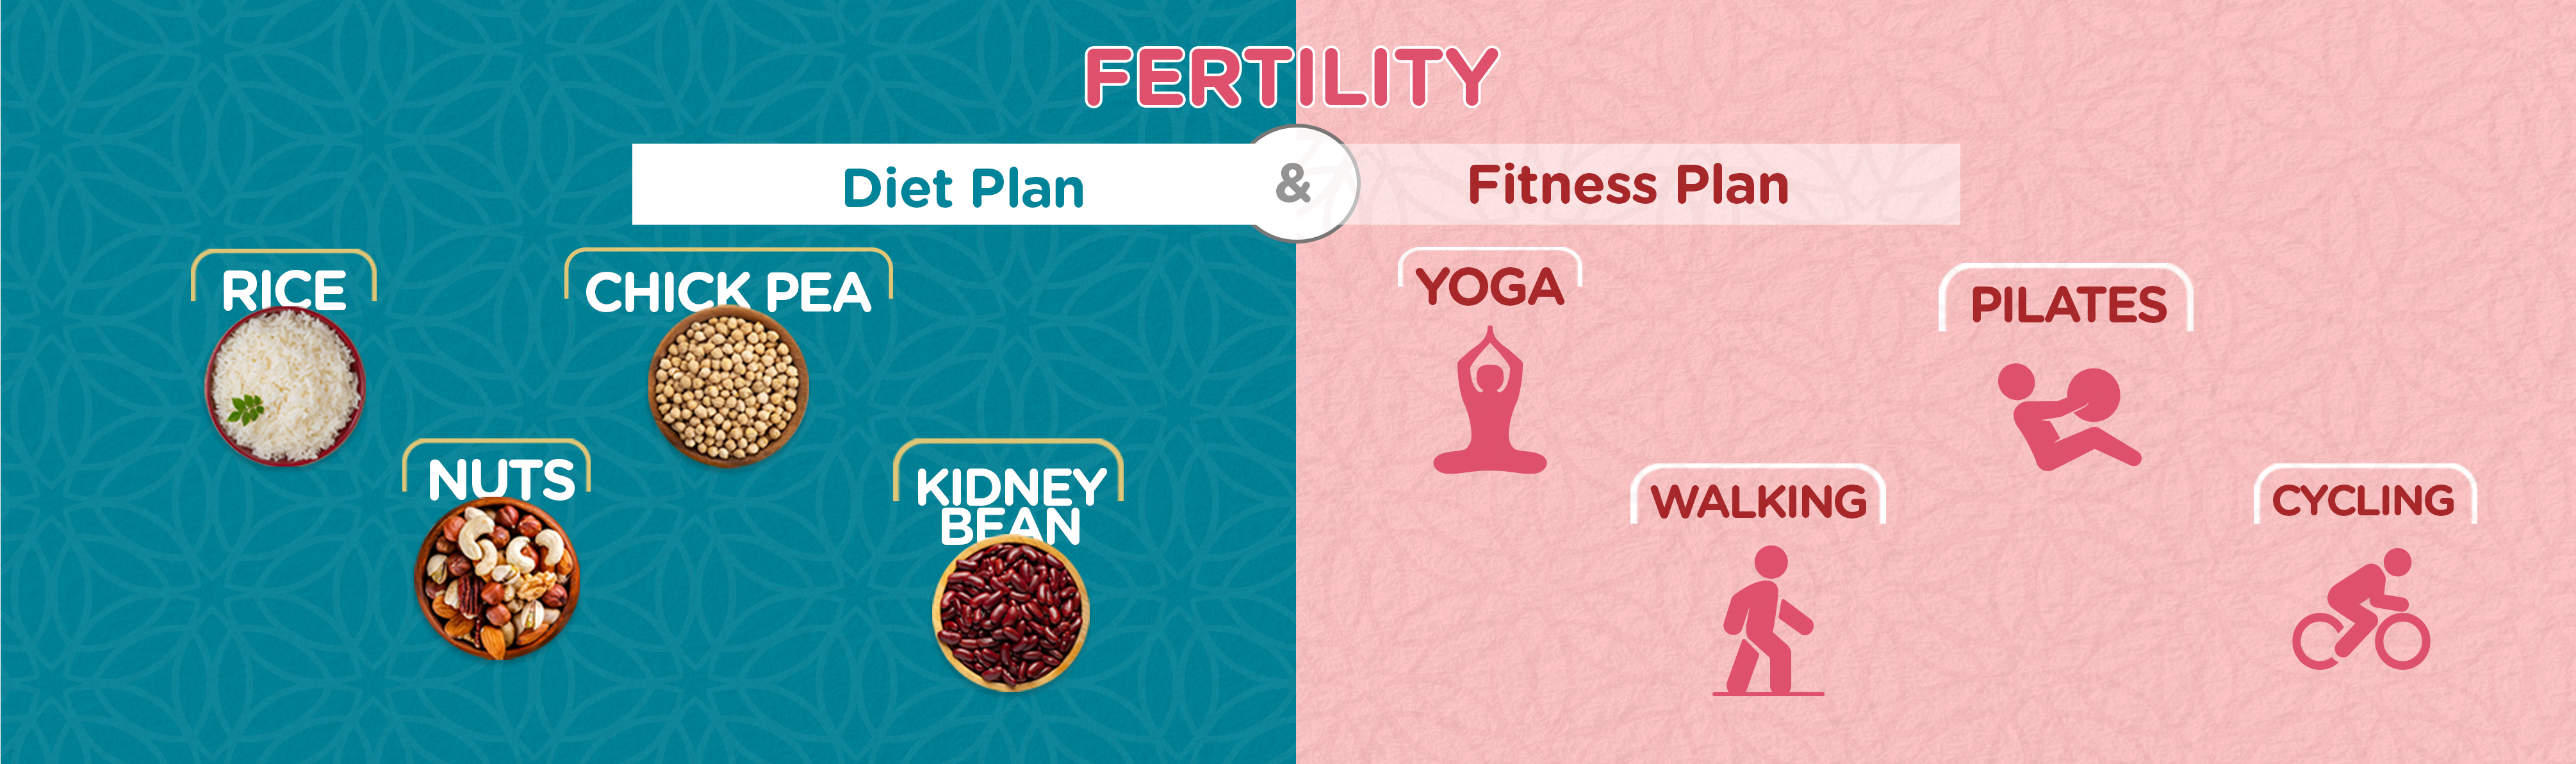 fertility diet plan and fitness plan